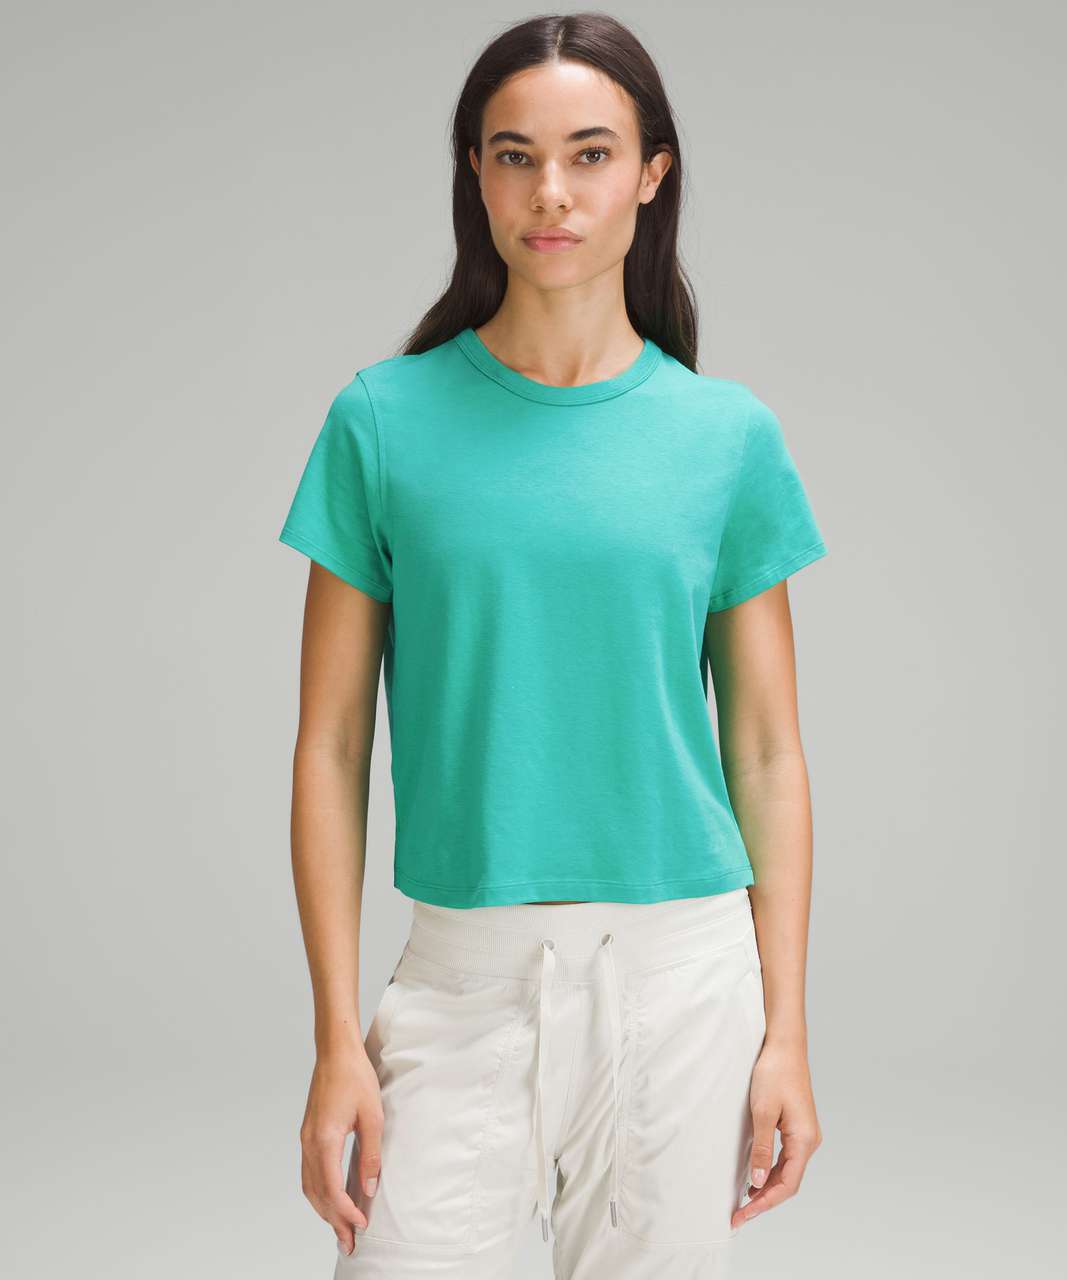 Lululemon Classic-Fit Cotton-Blend T-Shirt - Kelly Green